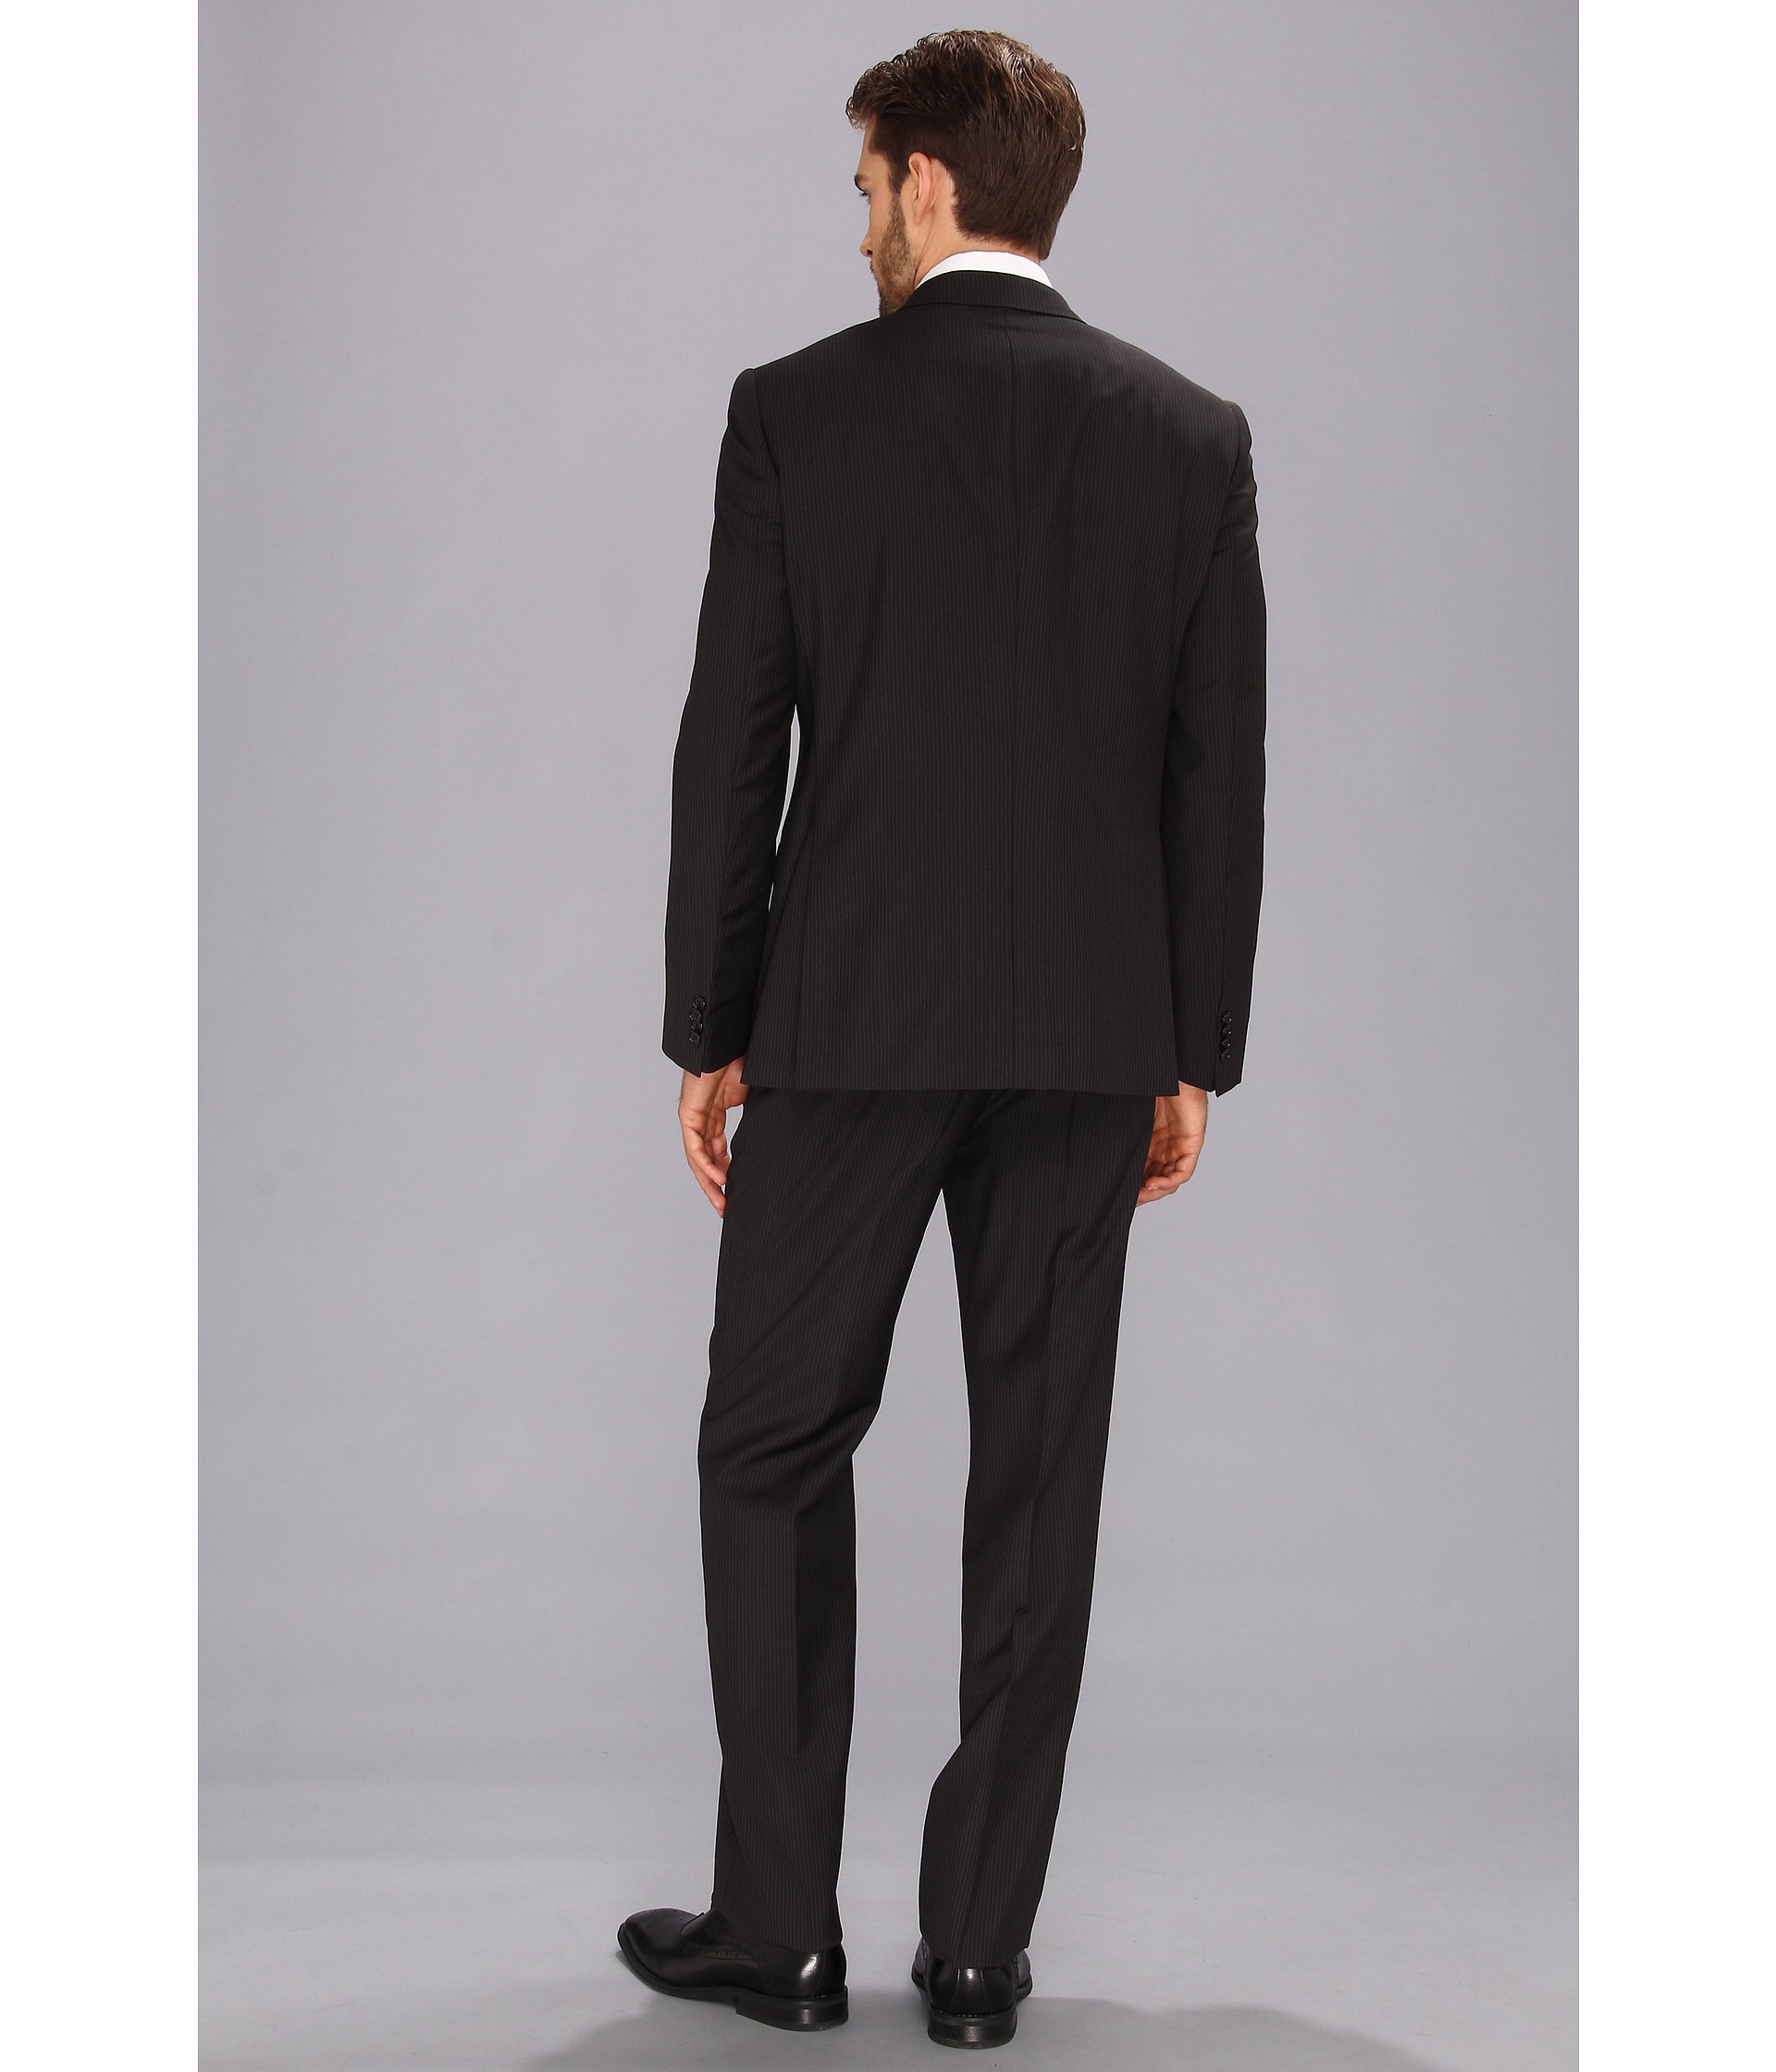 Lyst - John Varvatos Berkley - 2 Button Peak Suit in Black for Men